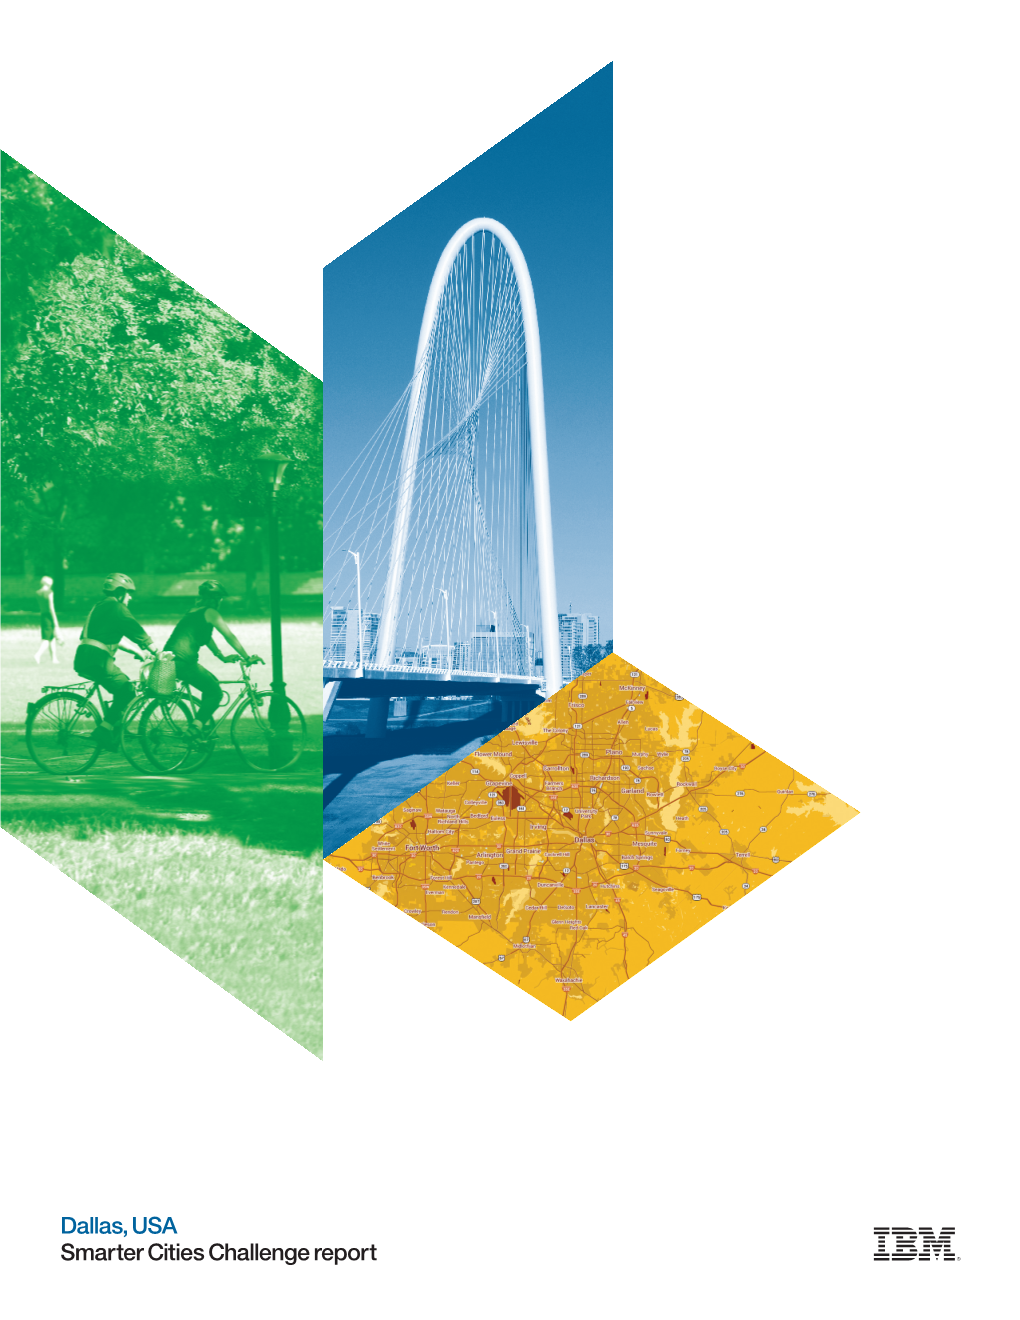 Dallas, USA Smarter Cities Challenge Report